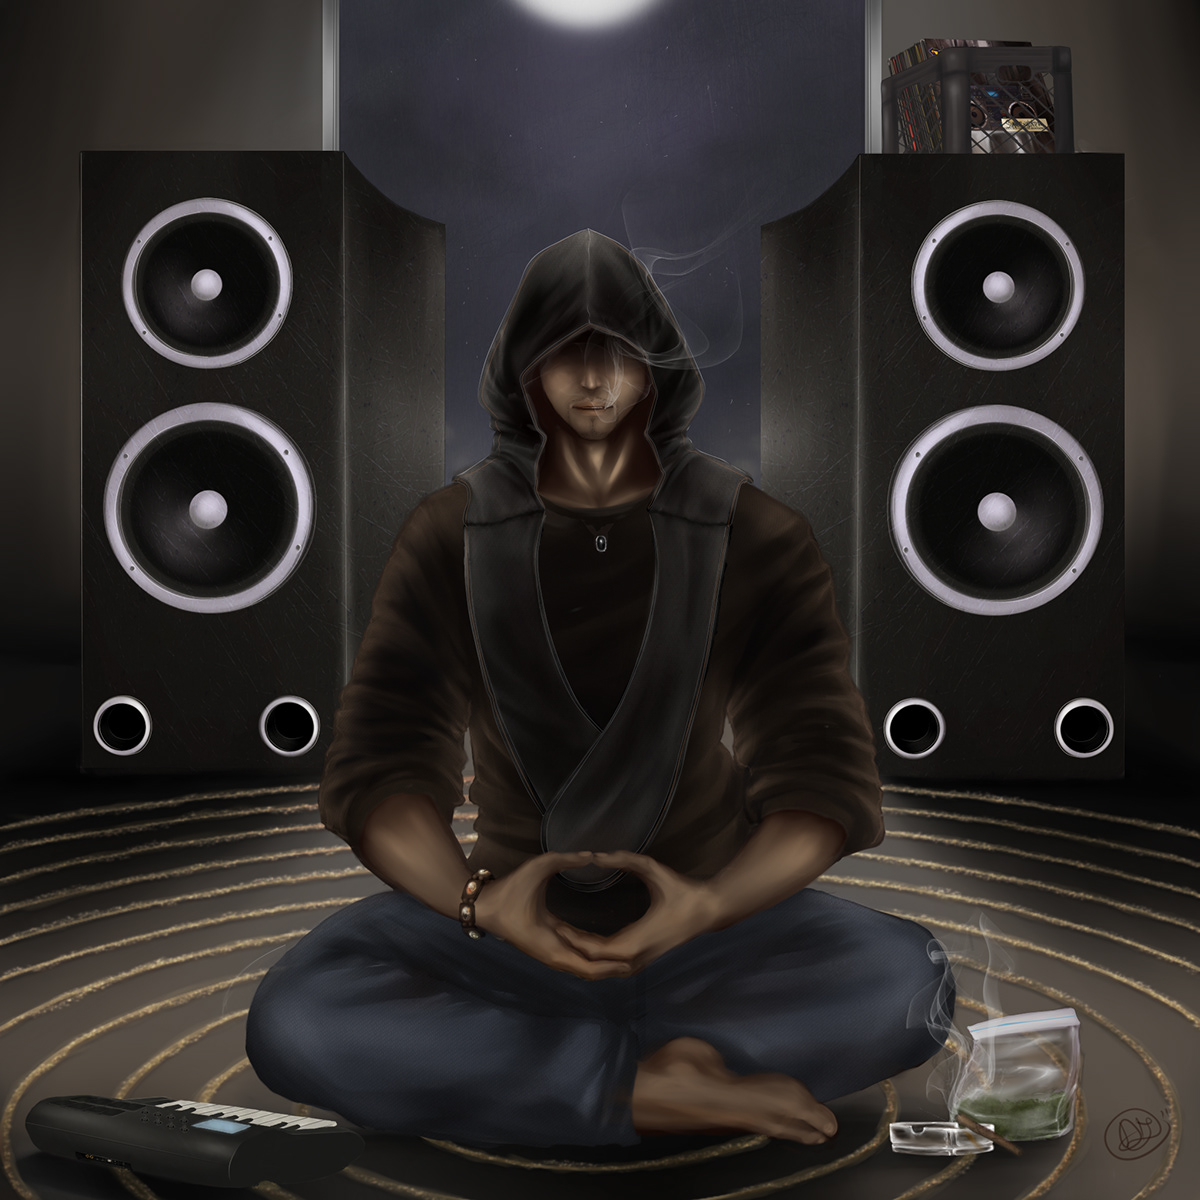 daniela larez  d3stic3 higher meditation  Music hoodie hoody moon light meditation man d3stic3